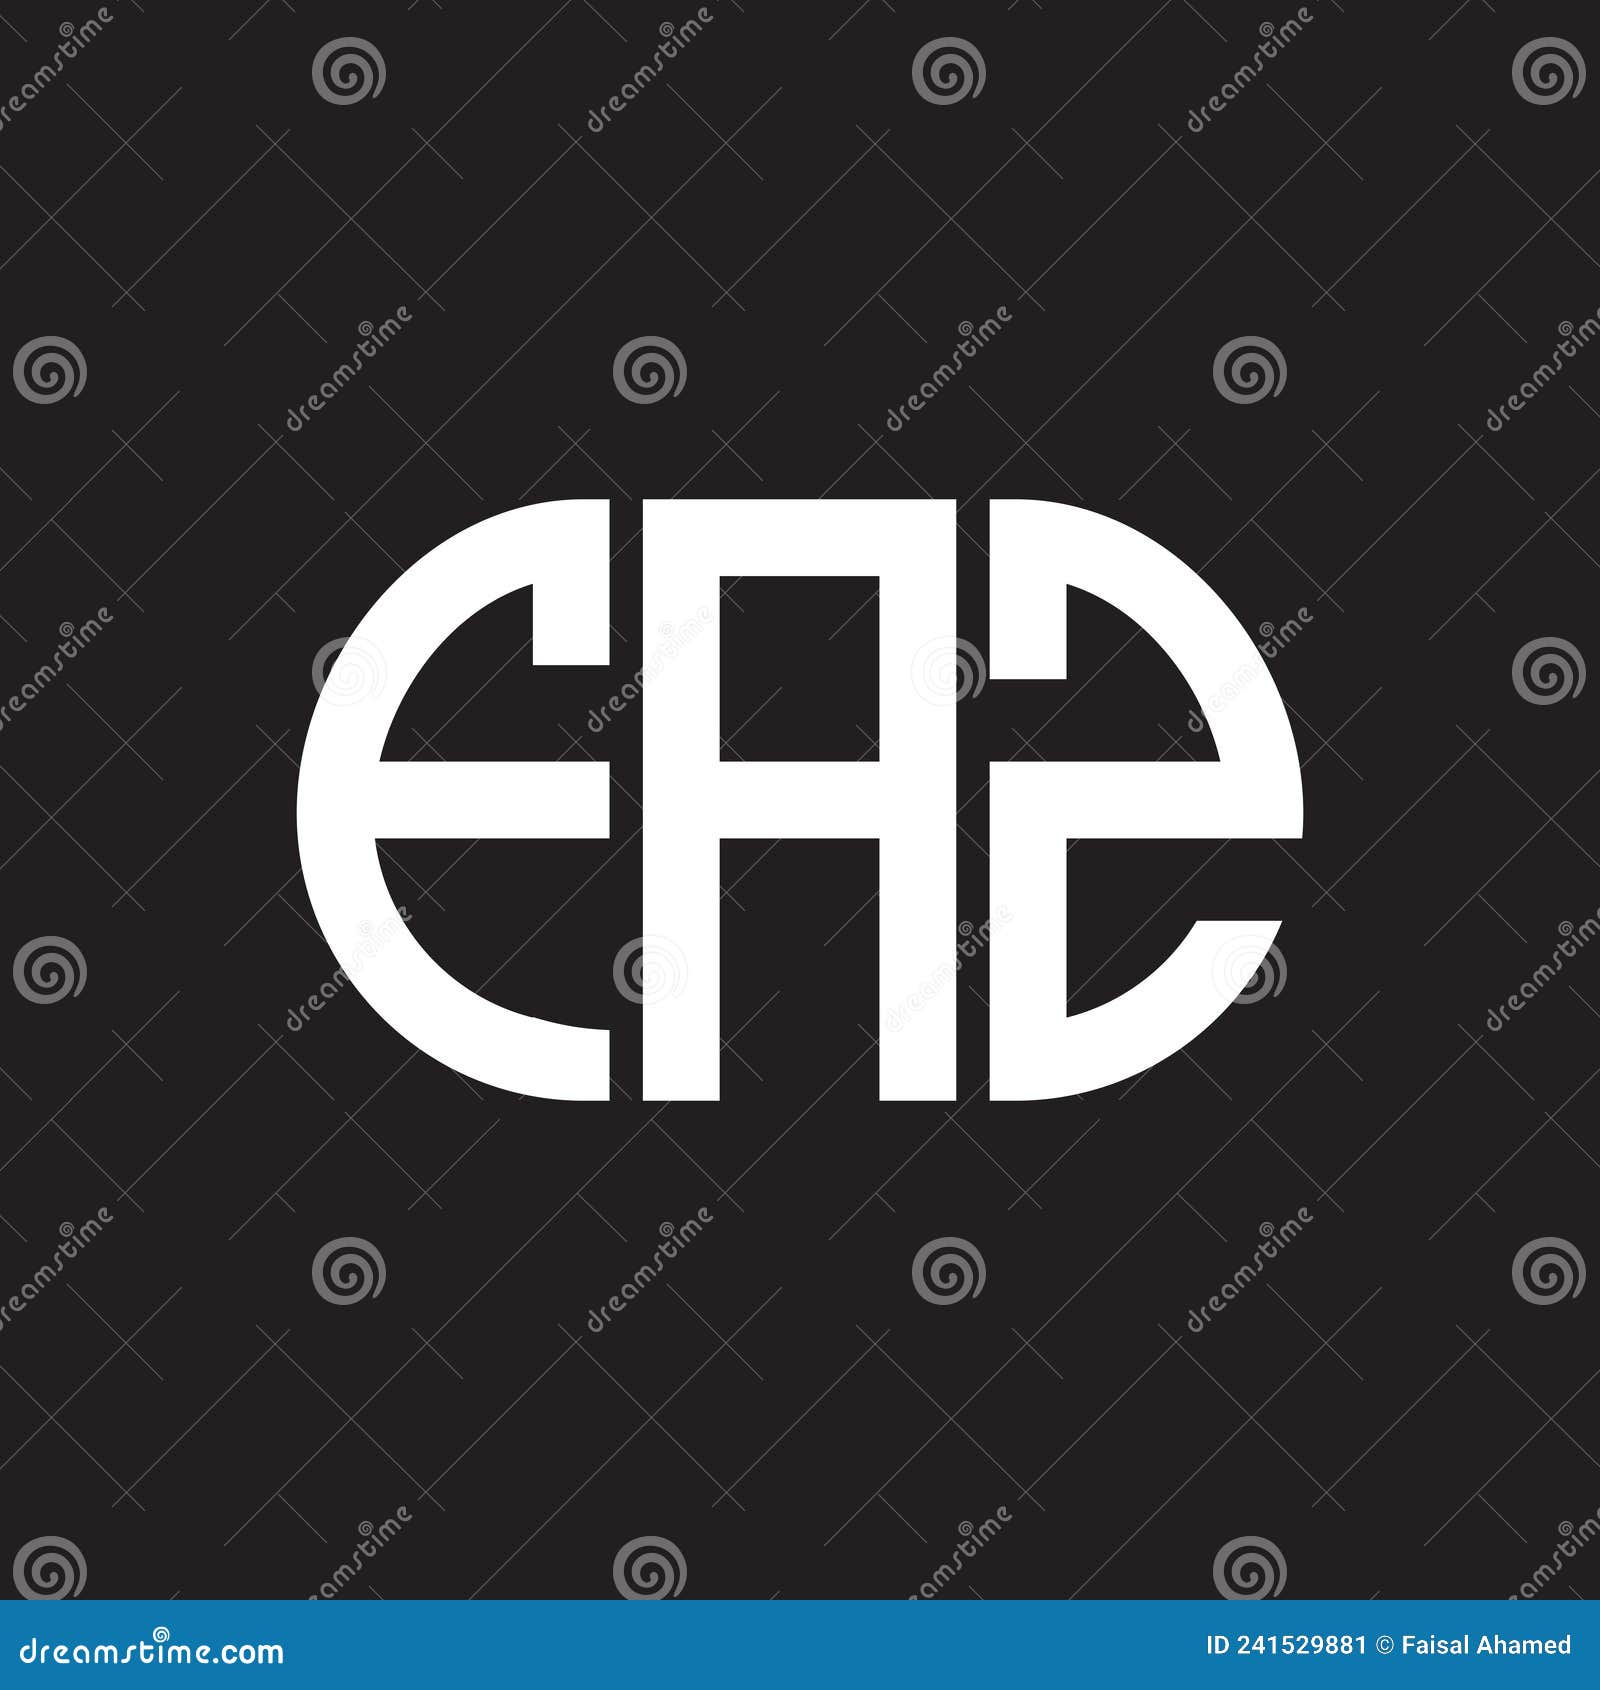 faz letter logo  on black background. faz creative initials letter logo concept. faz letter 